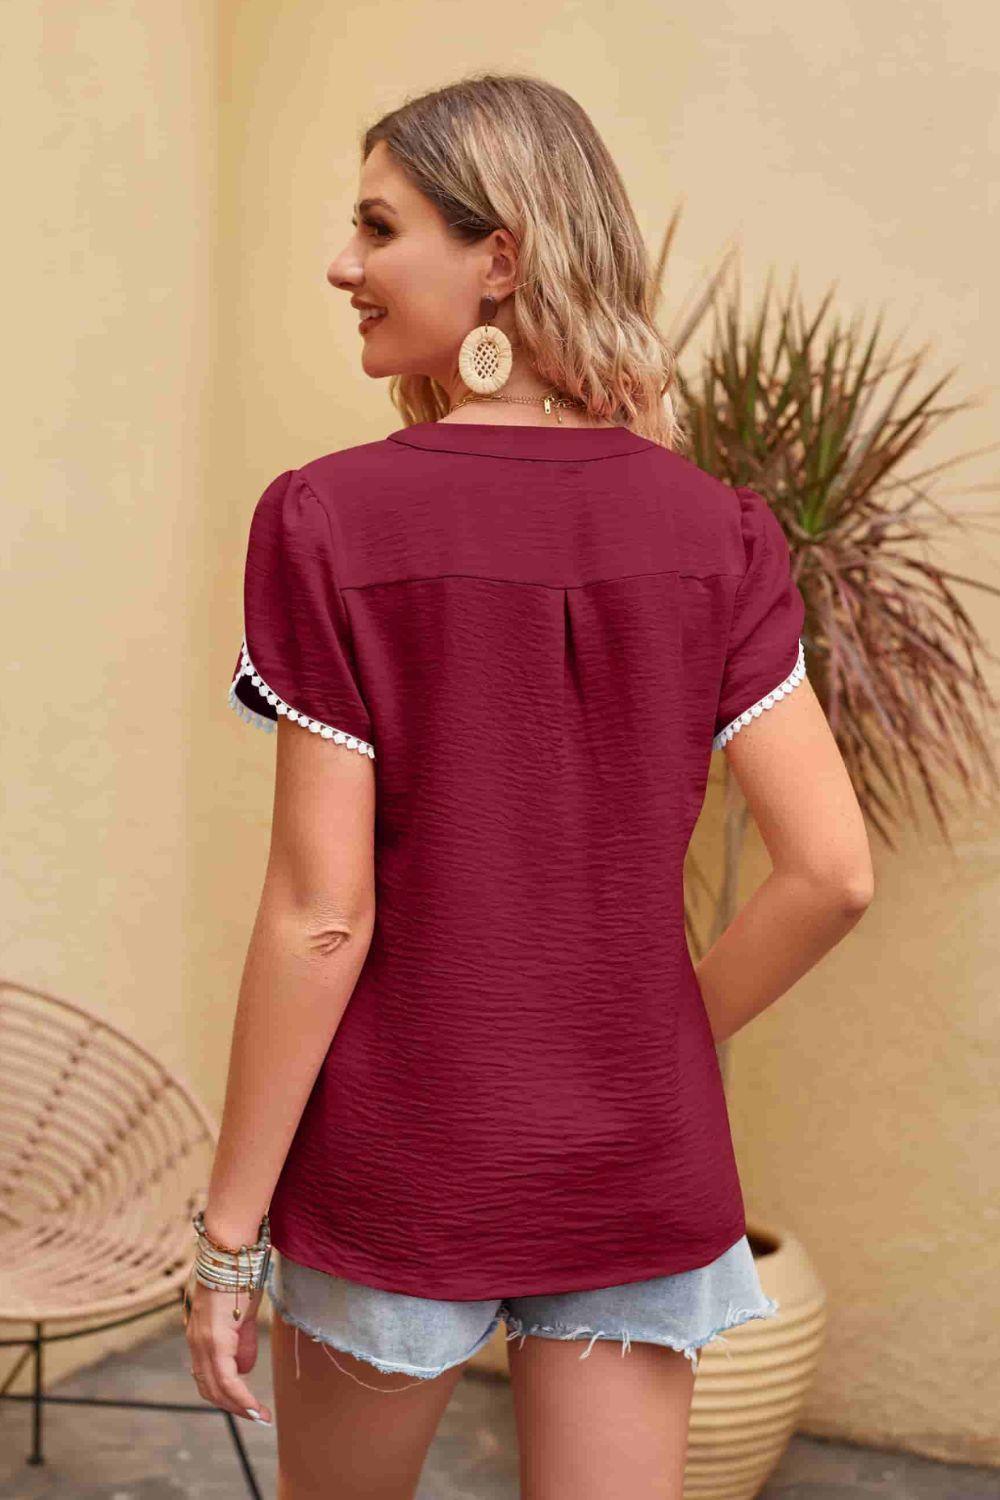 Women's Shirts Contrast Trim Pom-Pom Detail Notched Neck Blouse